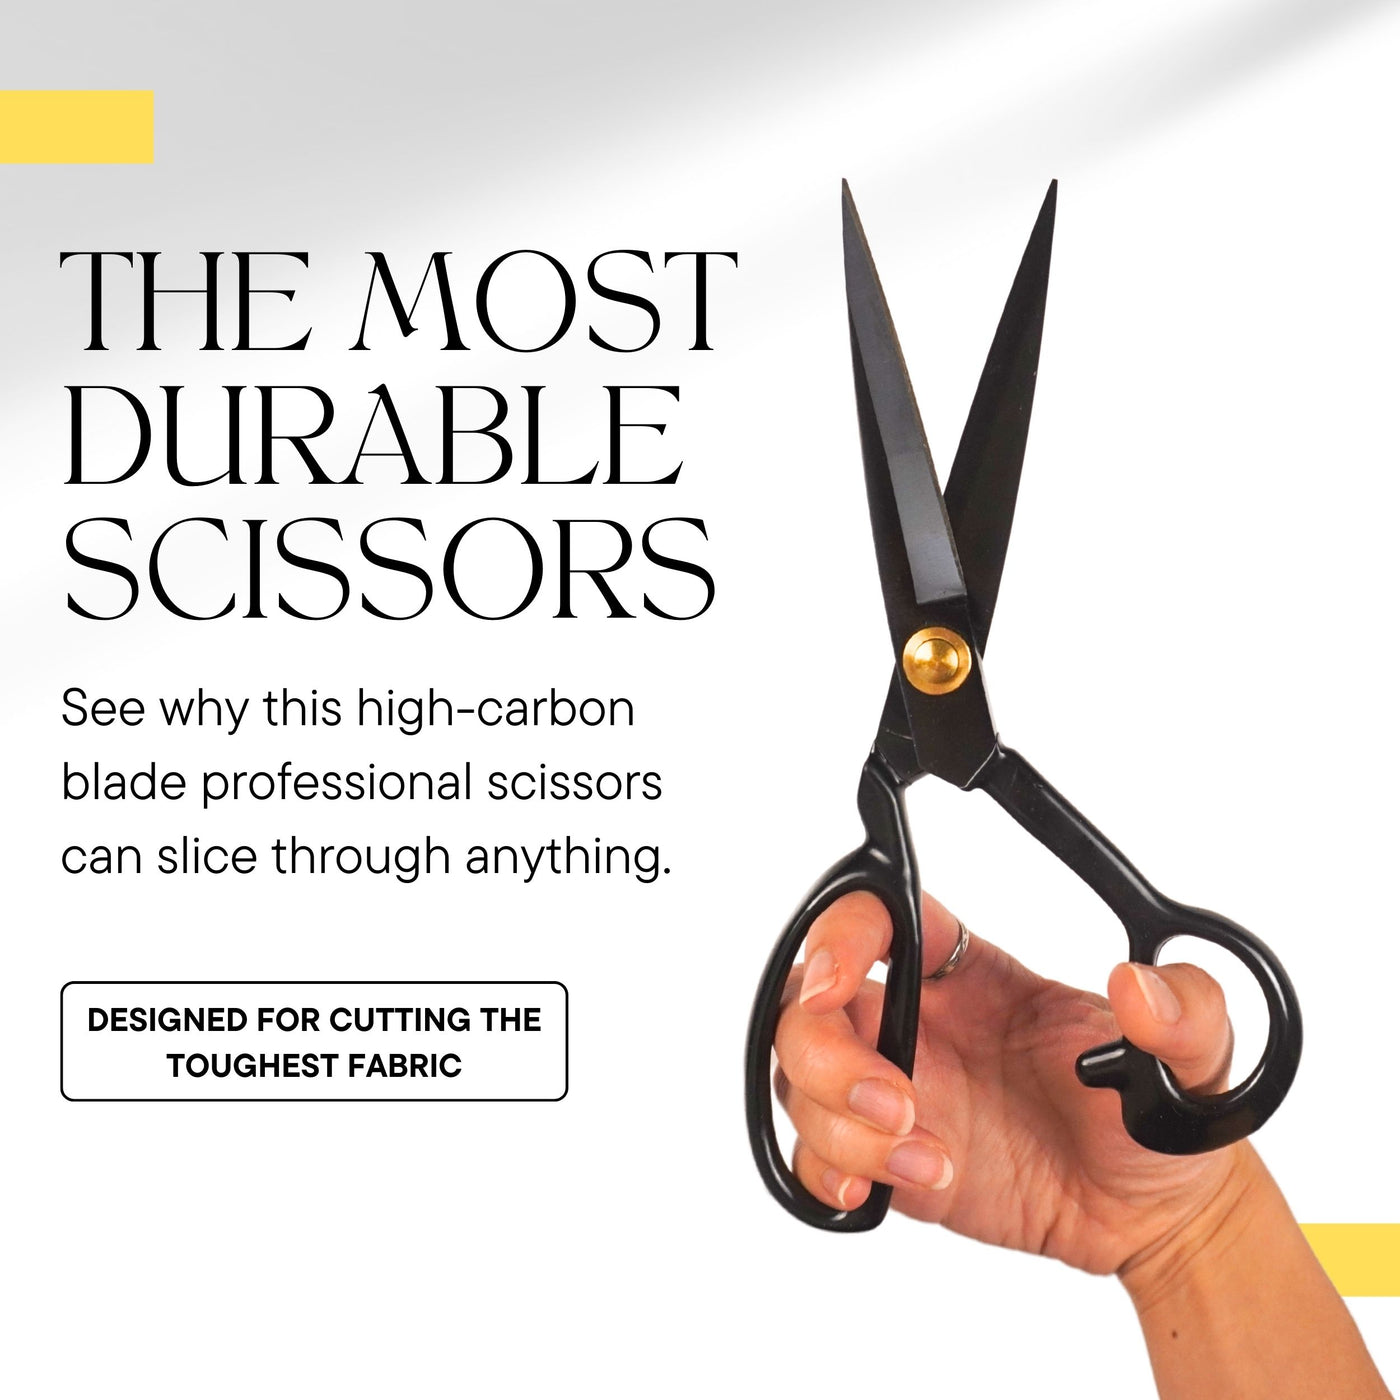 9" Professional Premium Macrame Scissors (Made for Tough Materials)